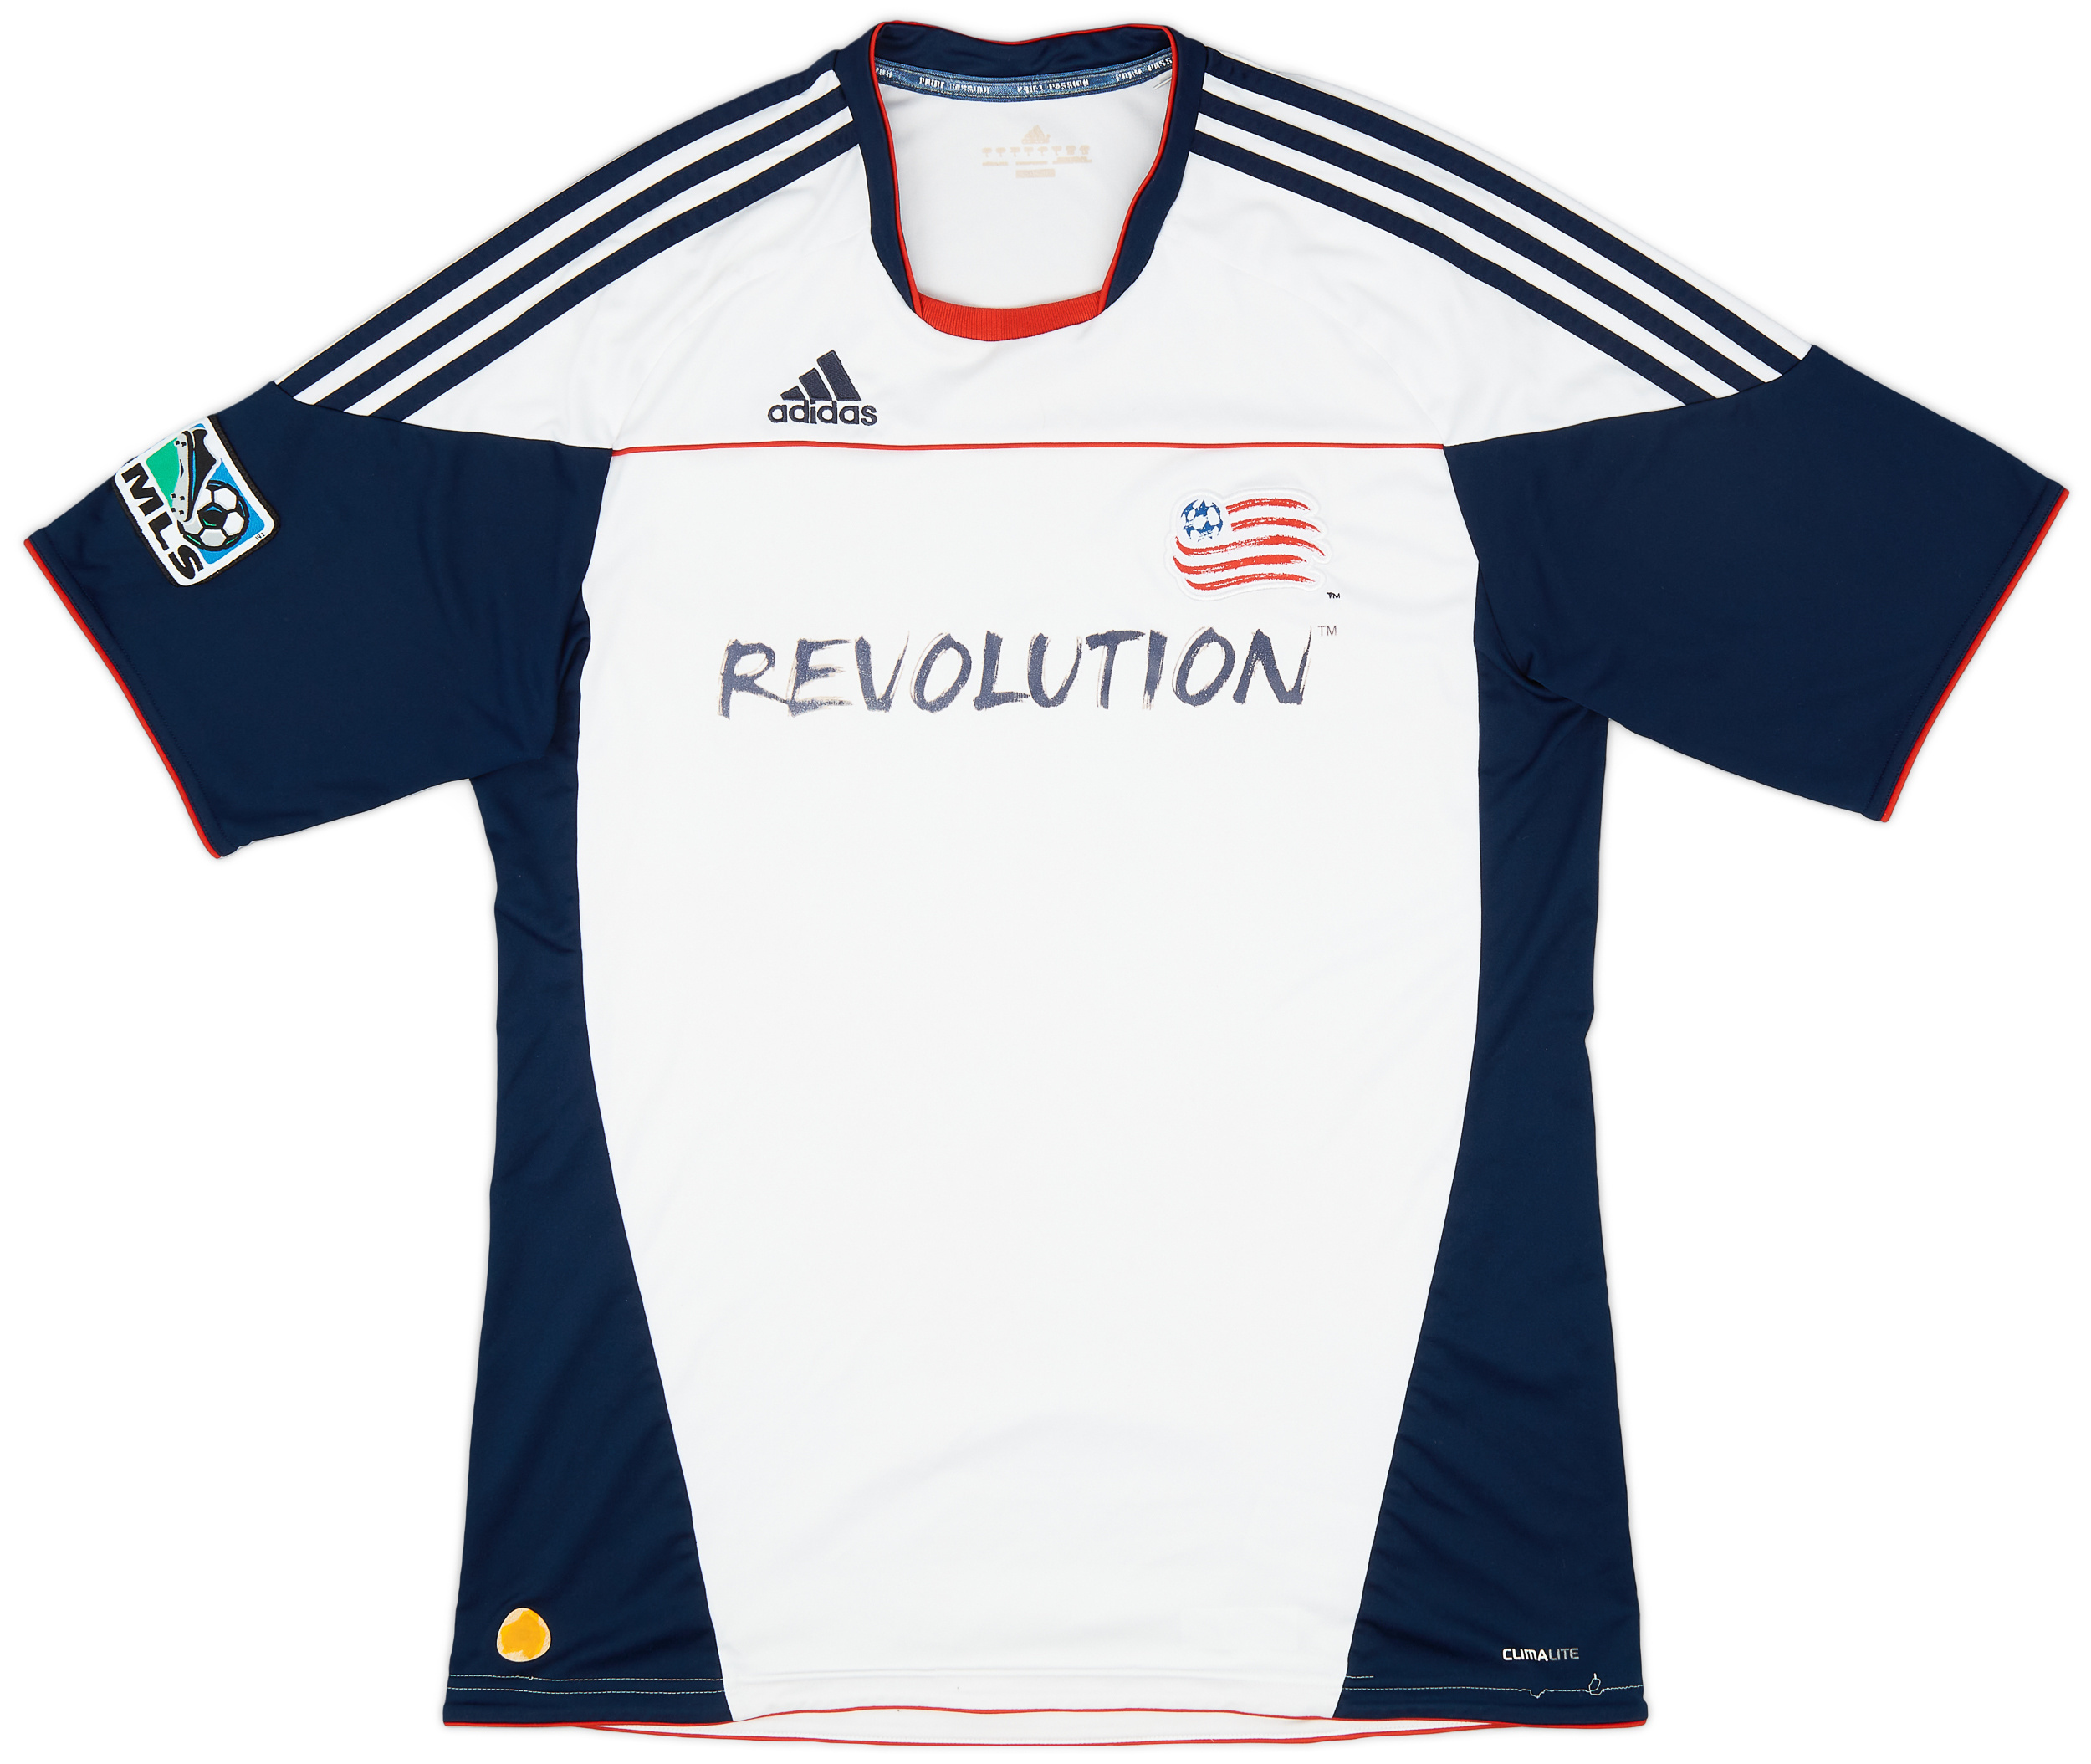 2010-11 New England Revolution Away Shirt - 6/10 - ()